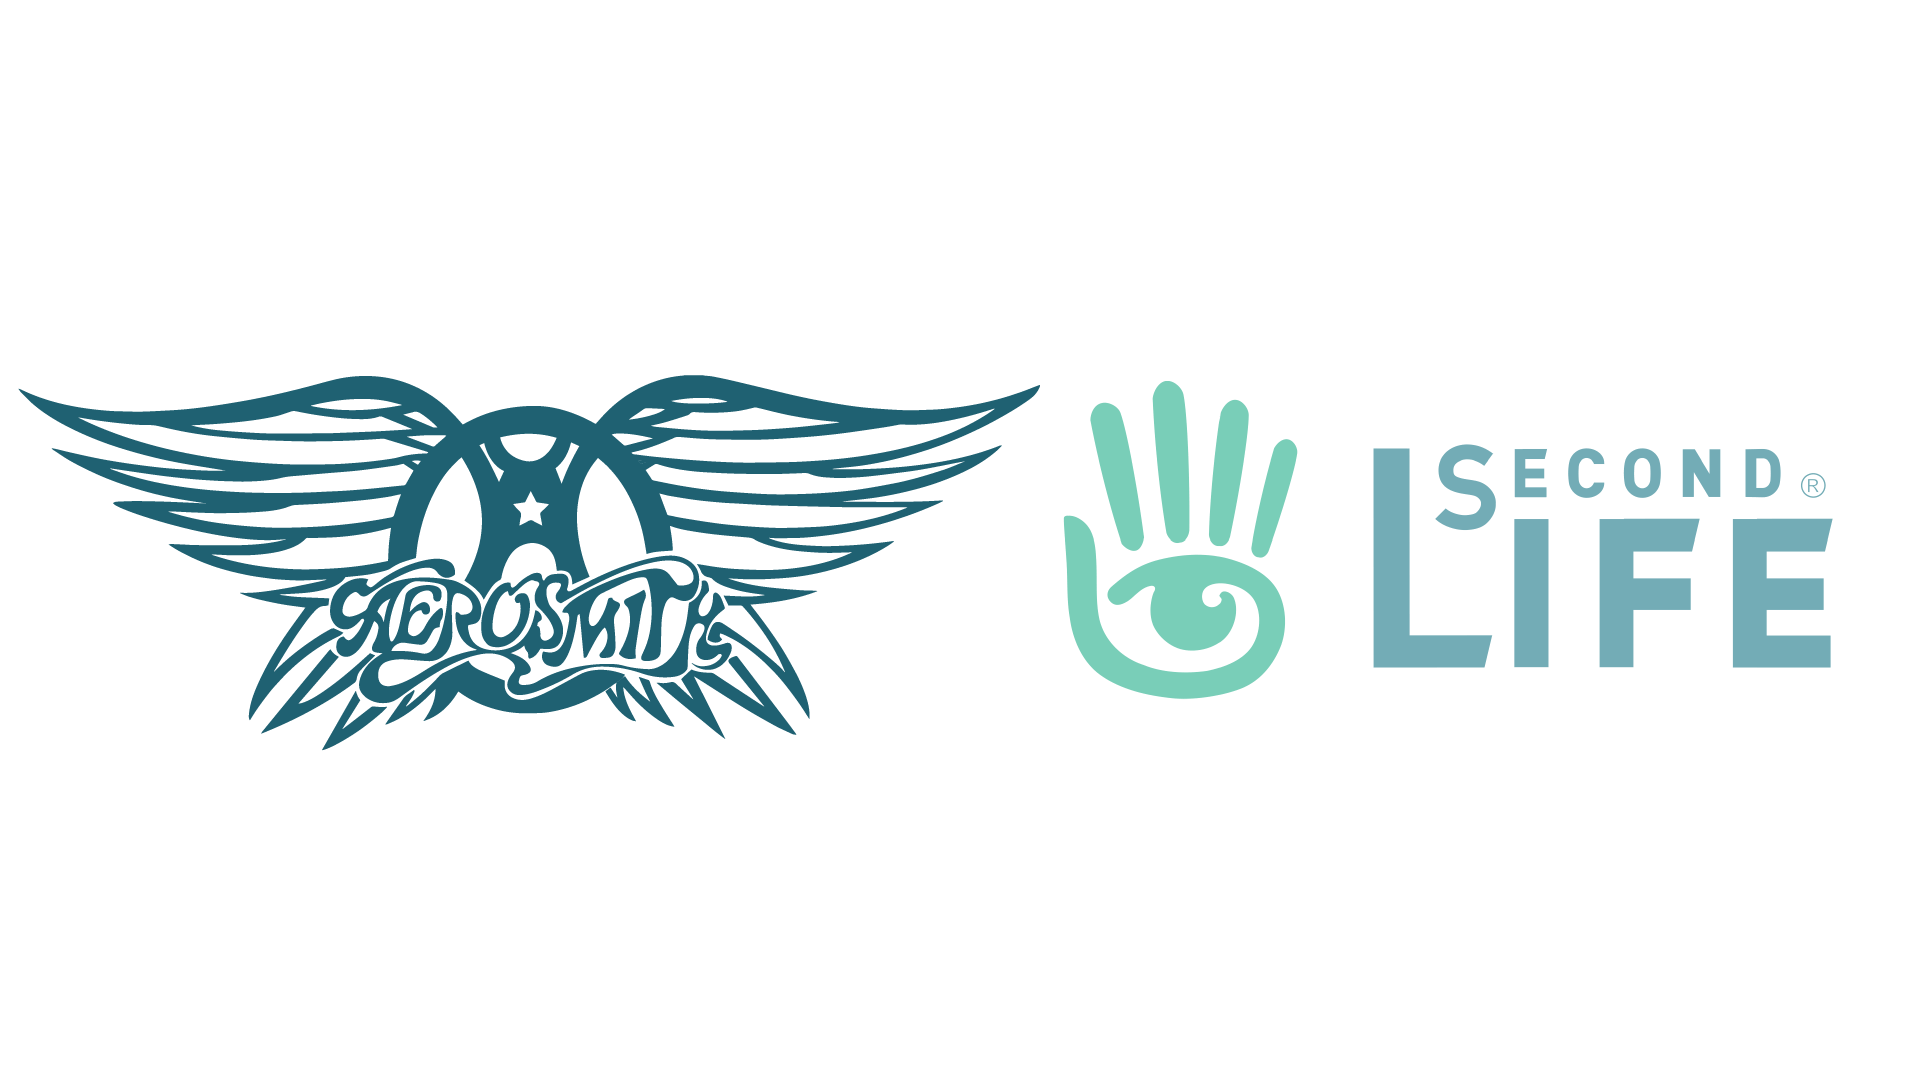 Social Influence: Aerosmith logo and Second Life logo 